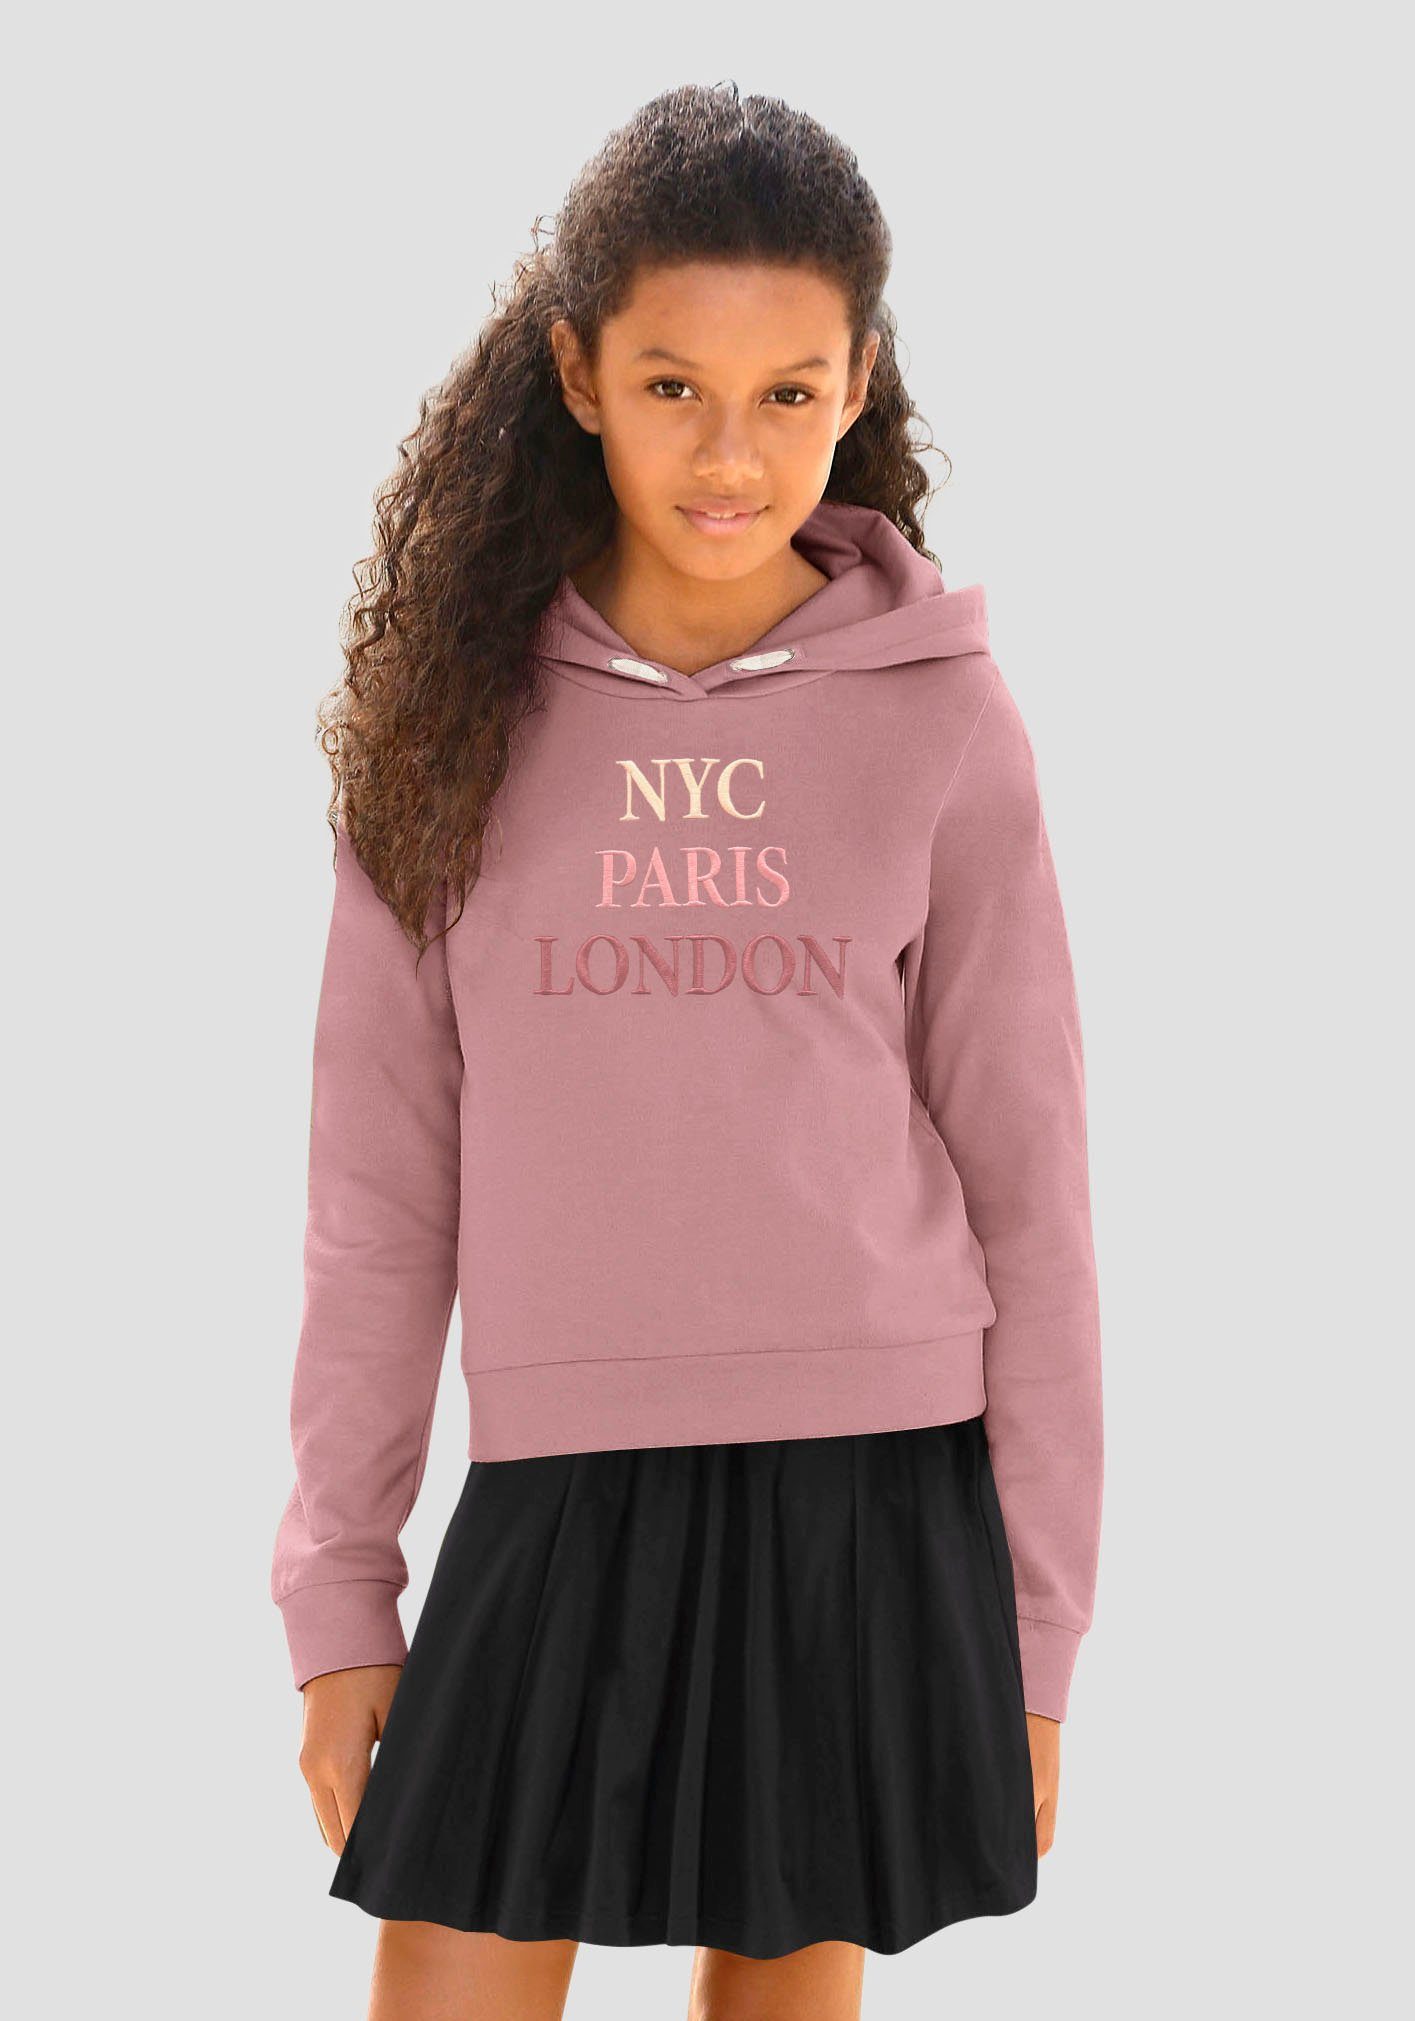 Paris Stickerei KIDSWORLD NYC mit London Kapuzensweatshirt